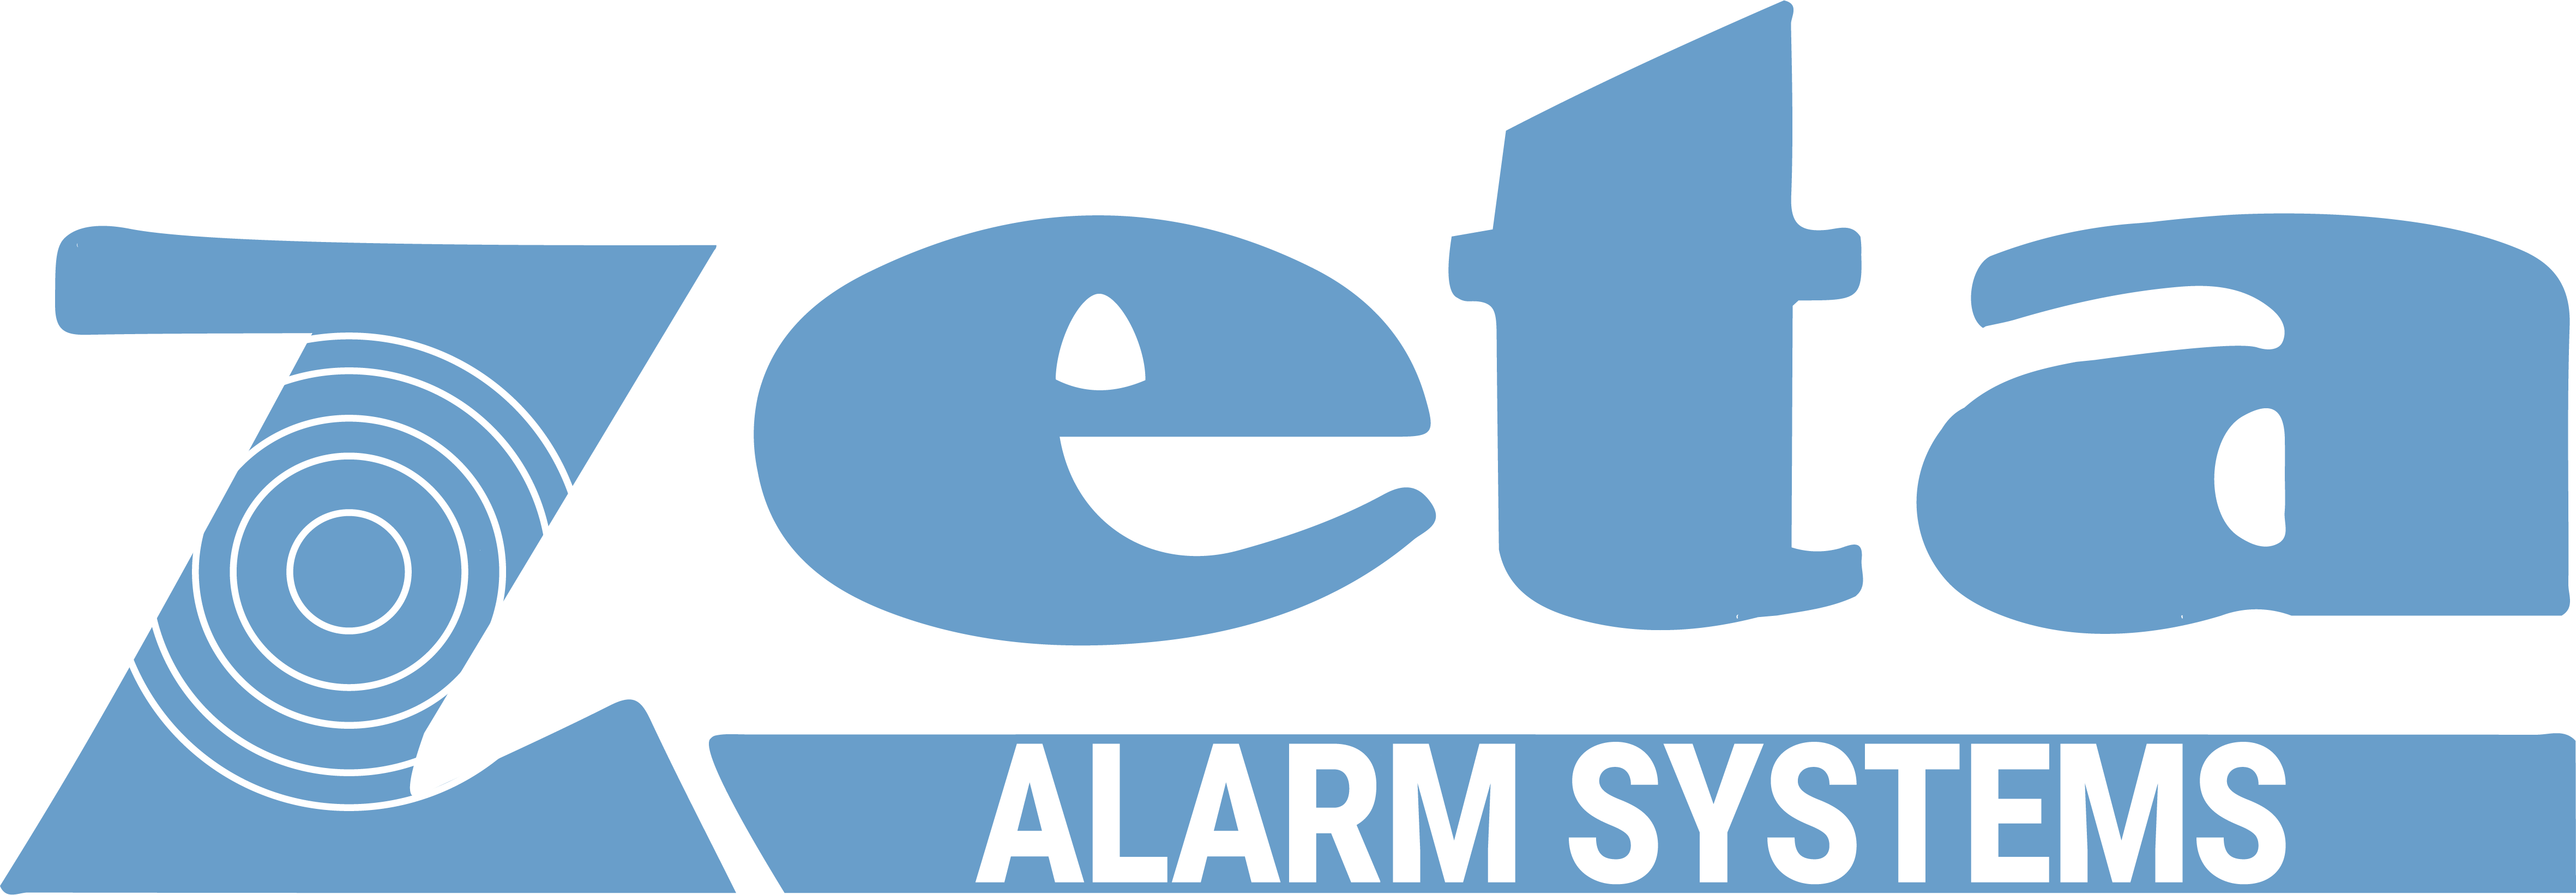 Zeta Fire alarm system